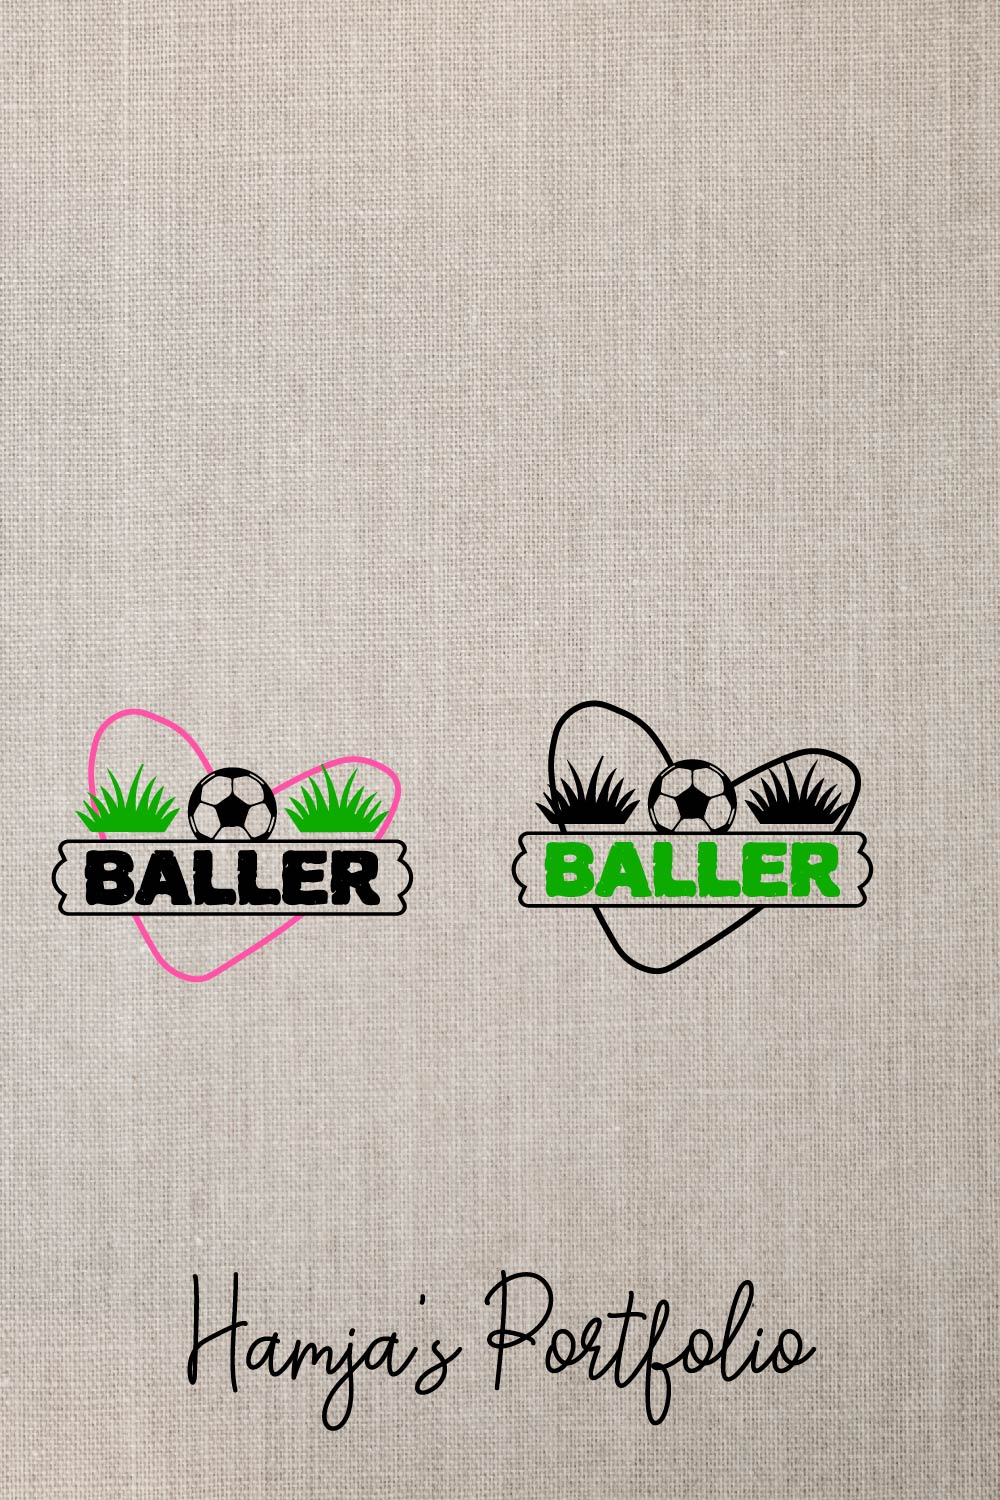 Baller Vector pinterest preview image.